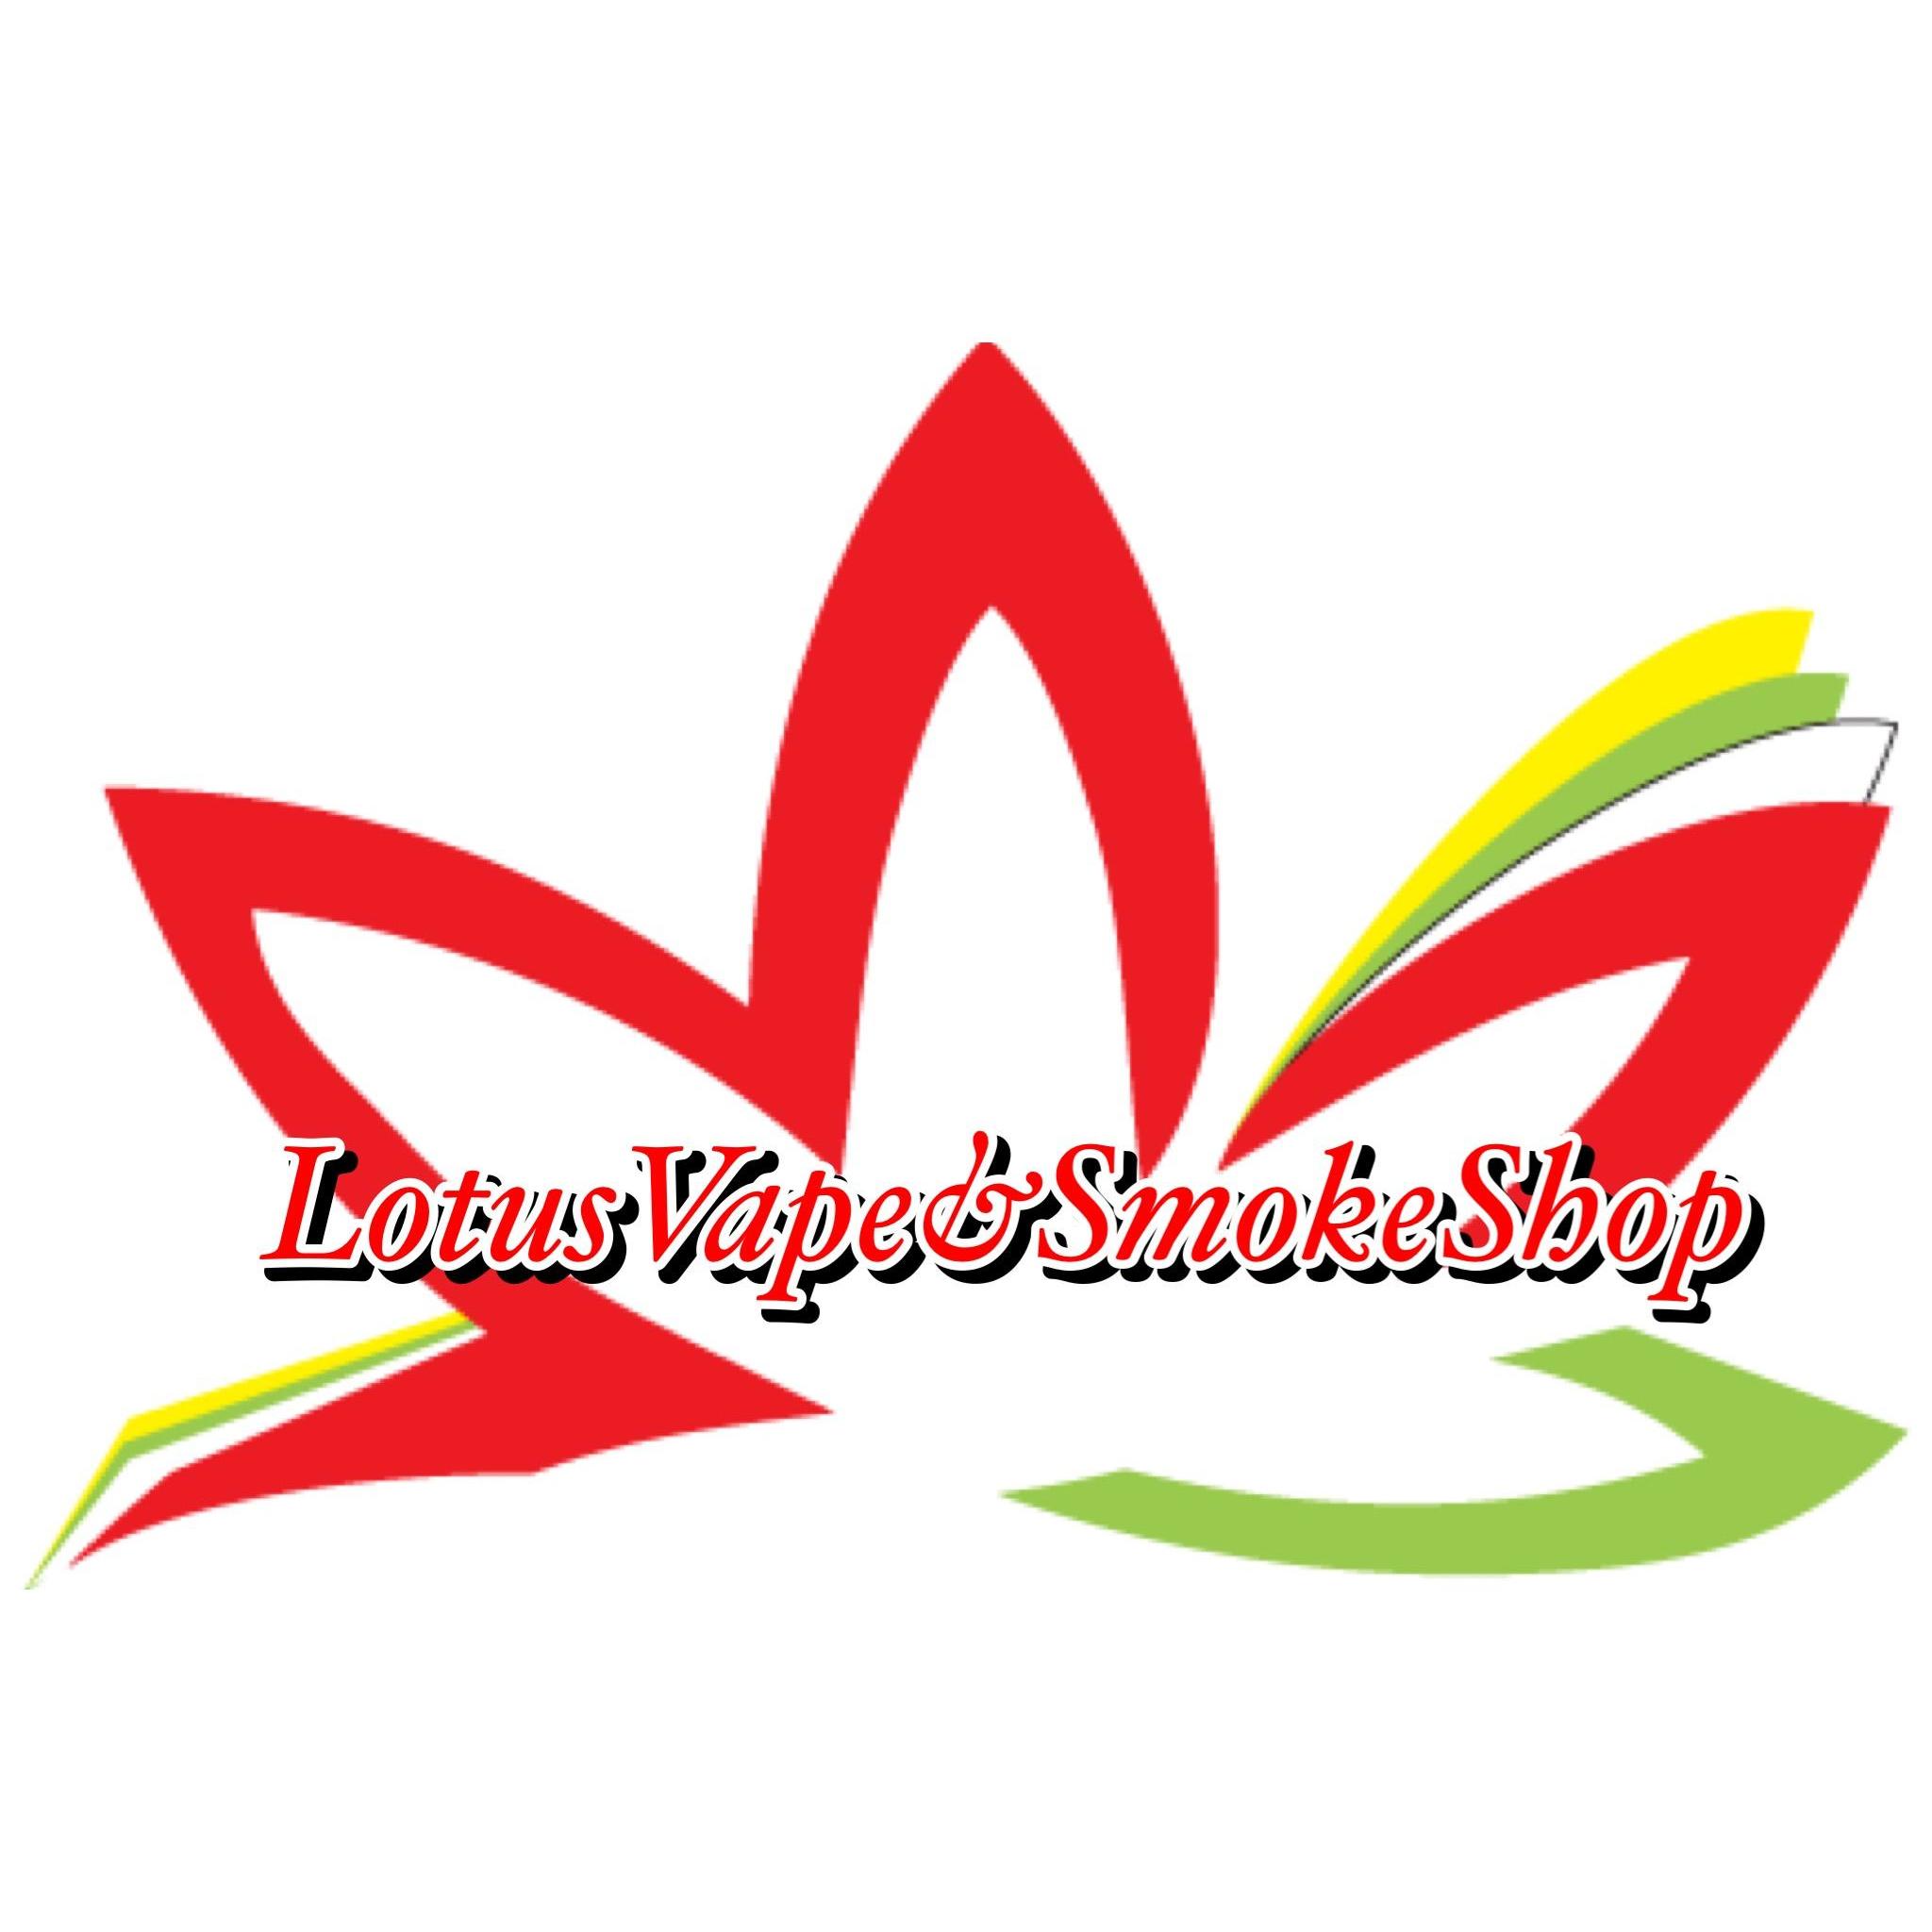 Lotus Vape & Smoke Shop - Fort Myers Photo